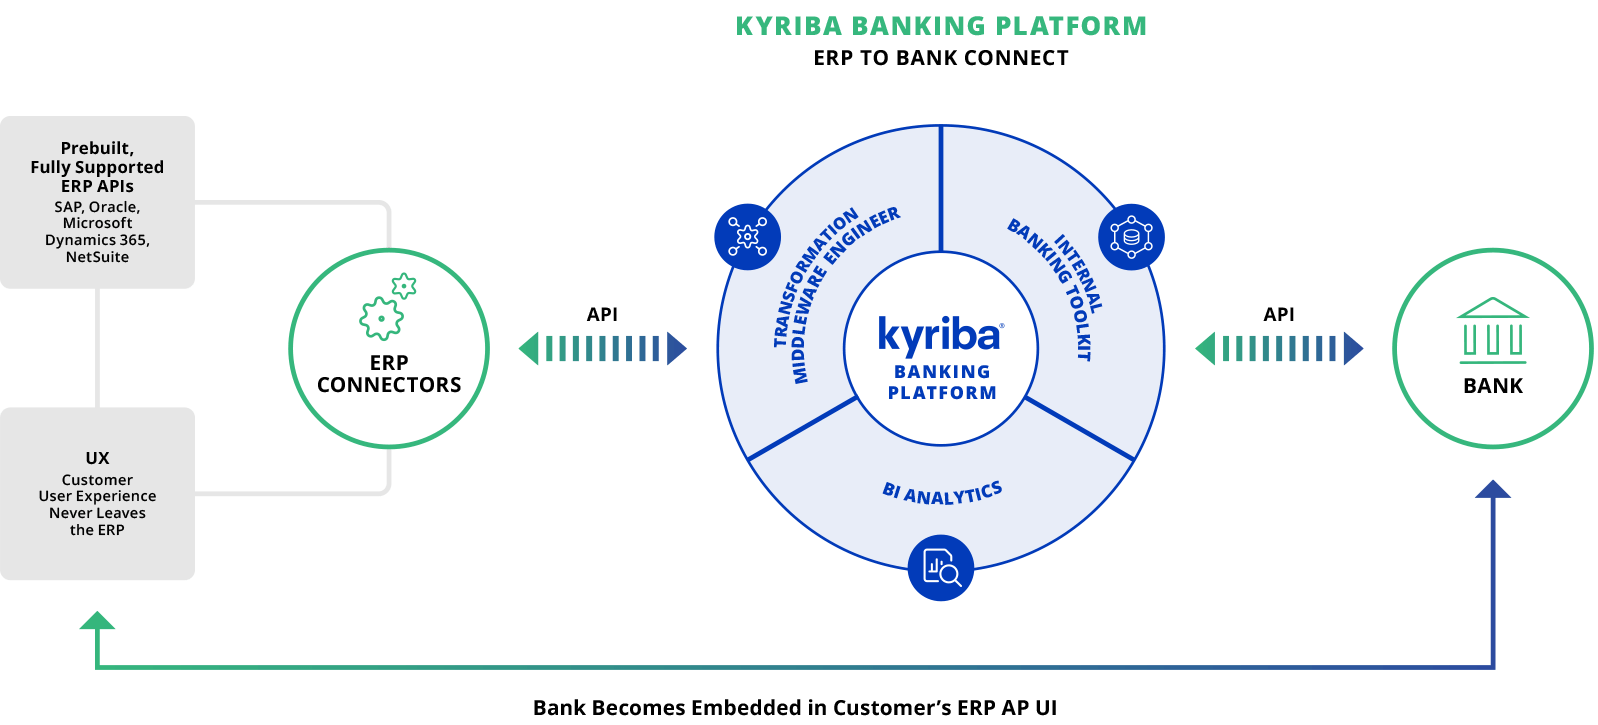 Kyriba Banking Platform